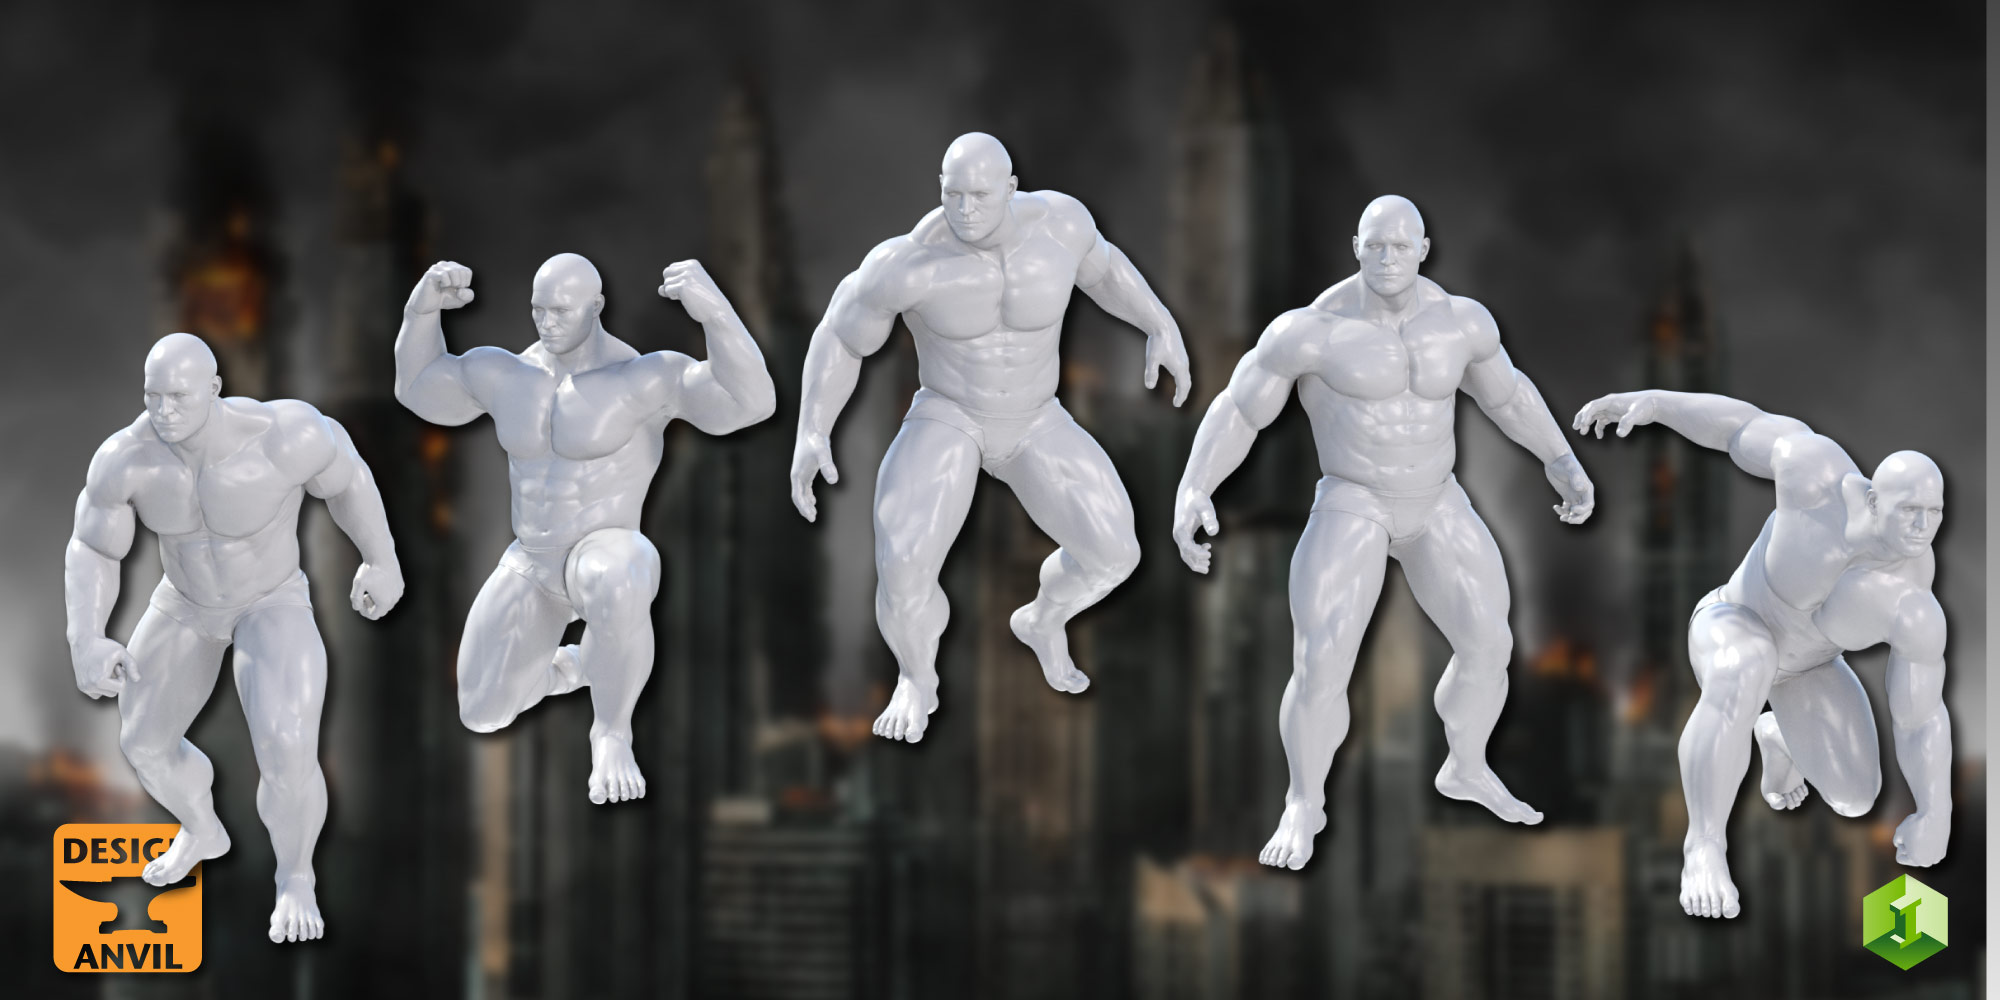 DA Untamed Poses for The Brute 8 by: Design Anvil, 3D Models by Daz 3D